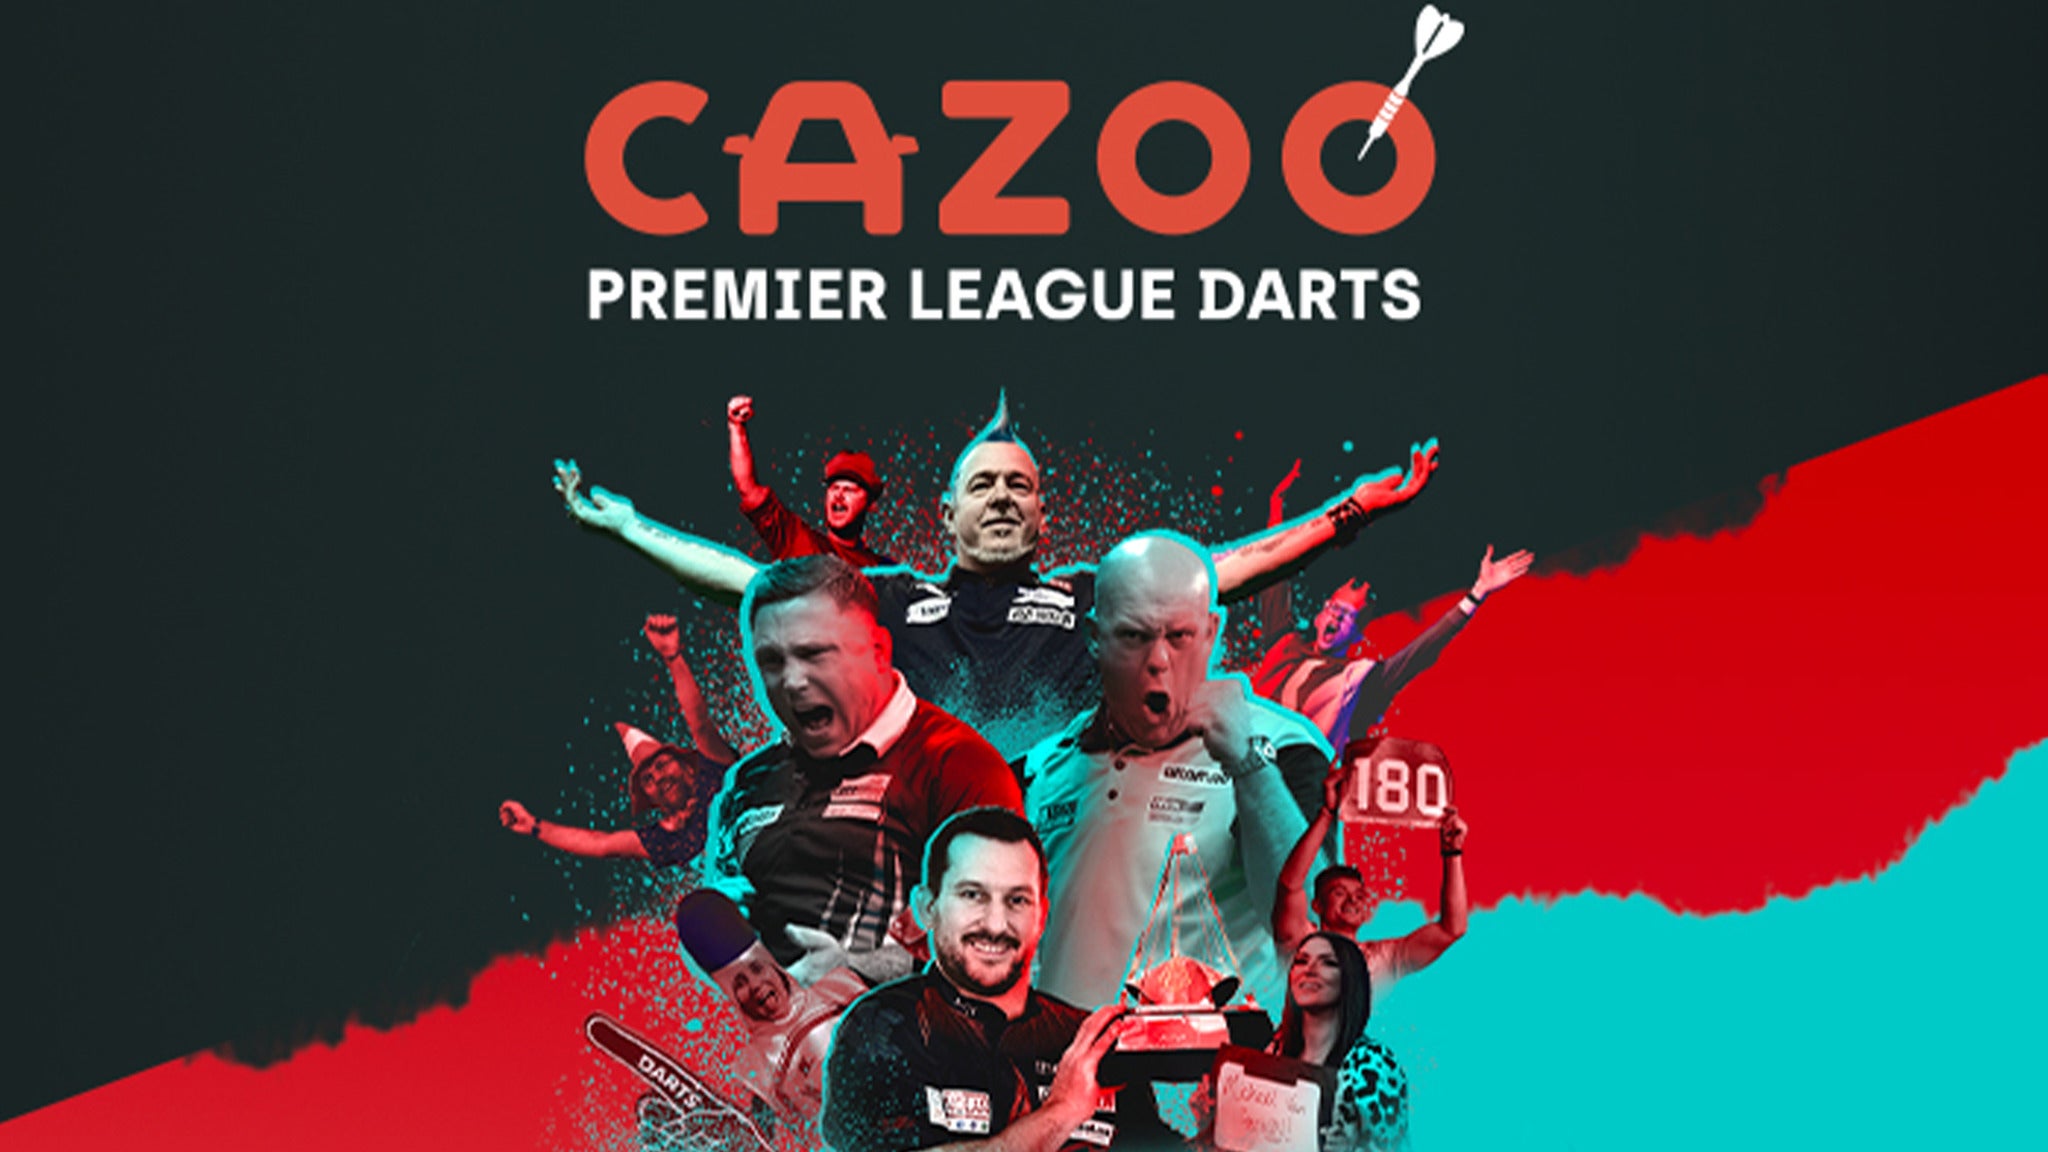 2022 Cazoo Premier League Darts - Arrow Package